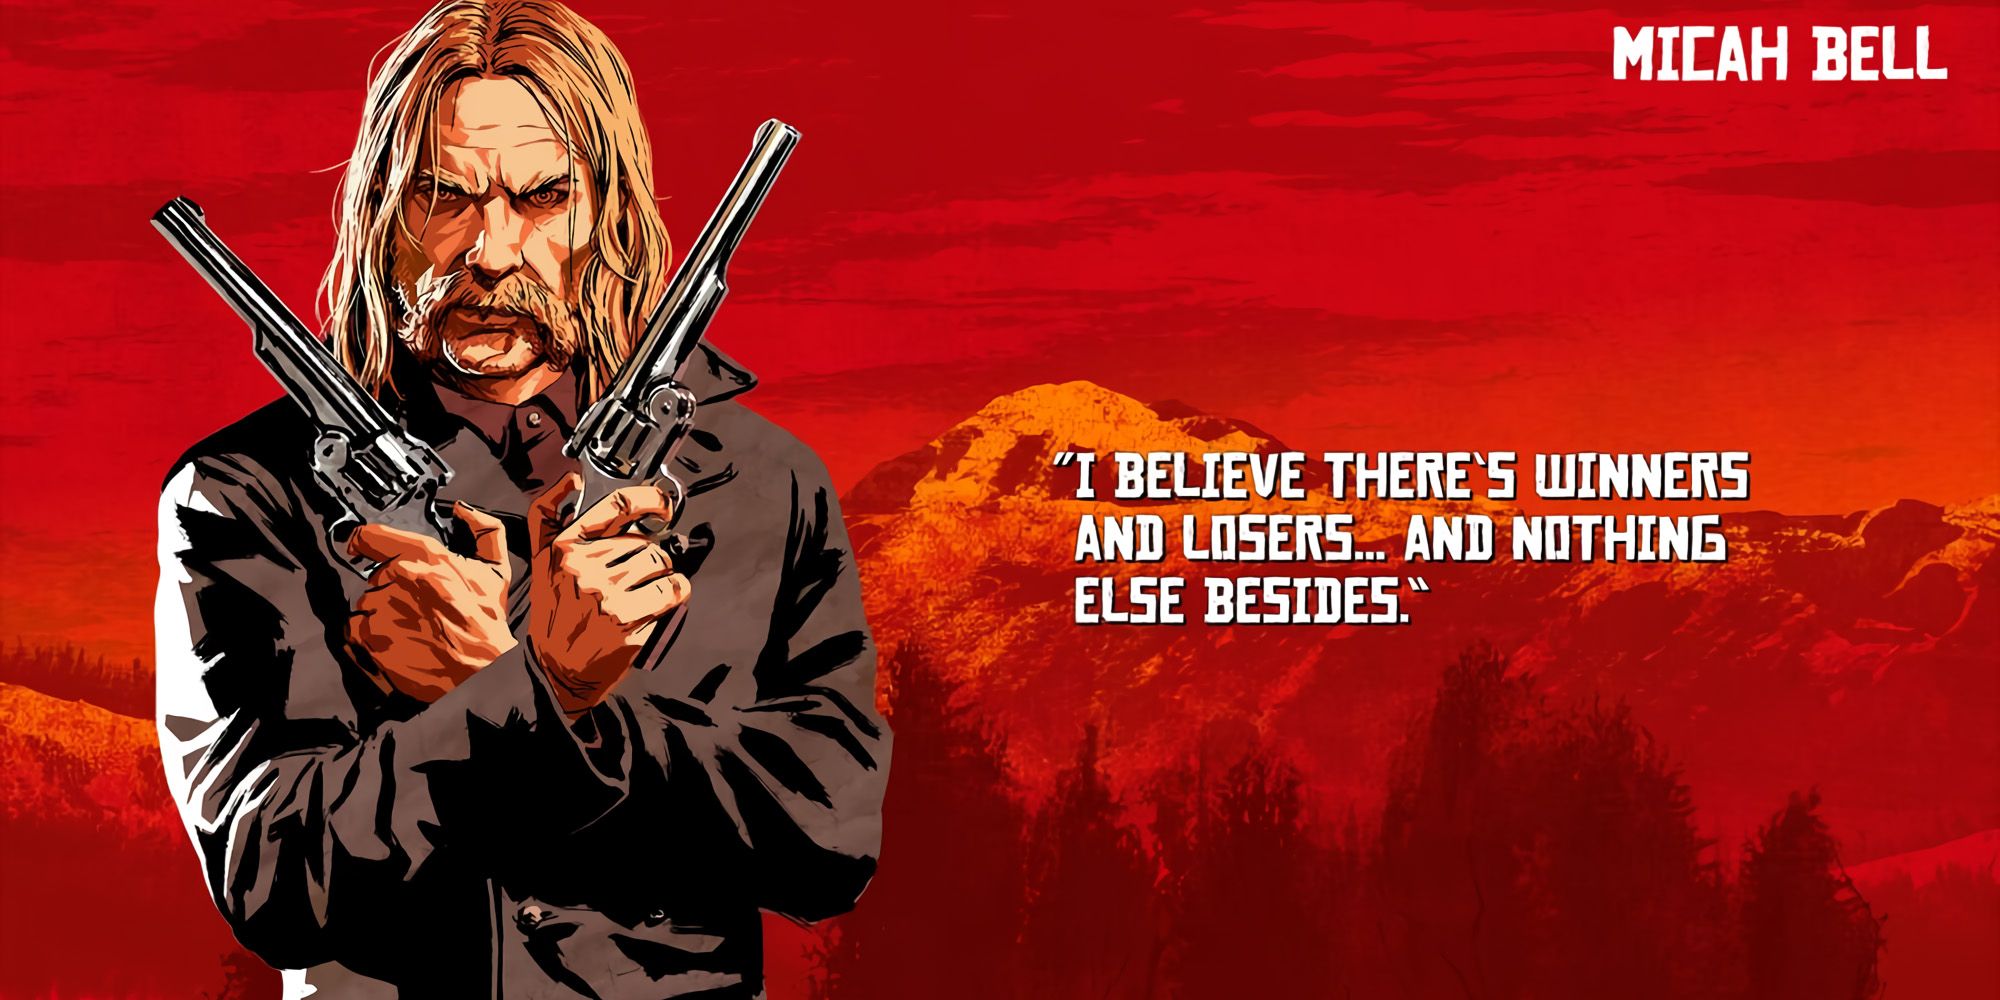 Micah Bell Red Dead Redemption 2 Promotional Art